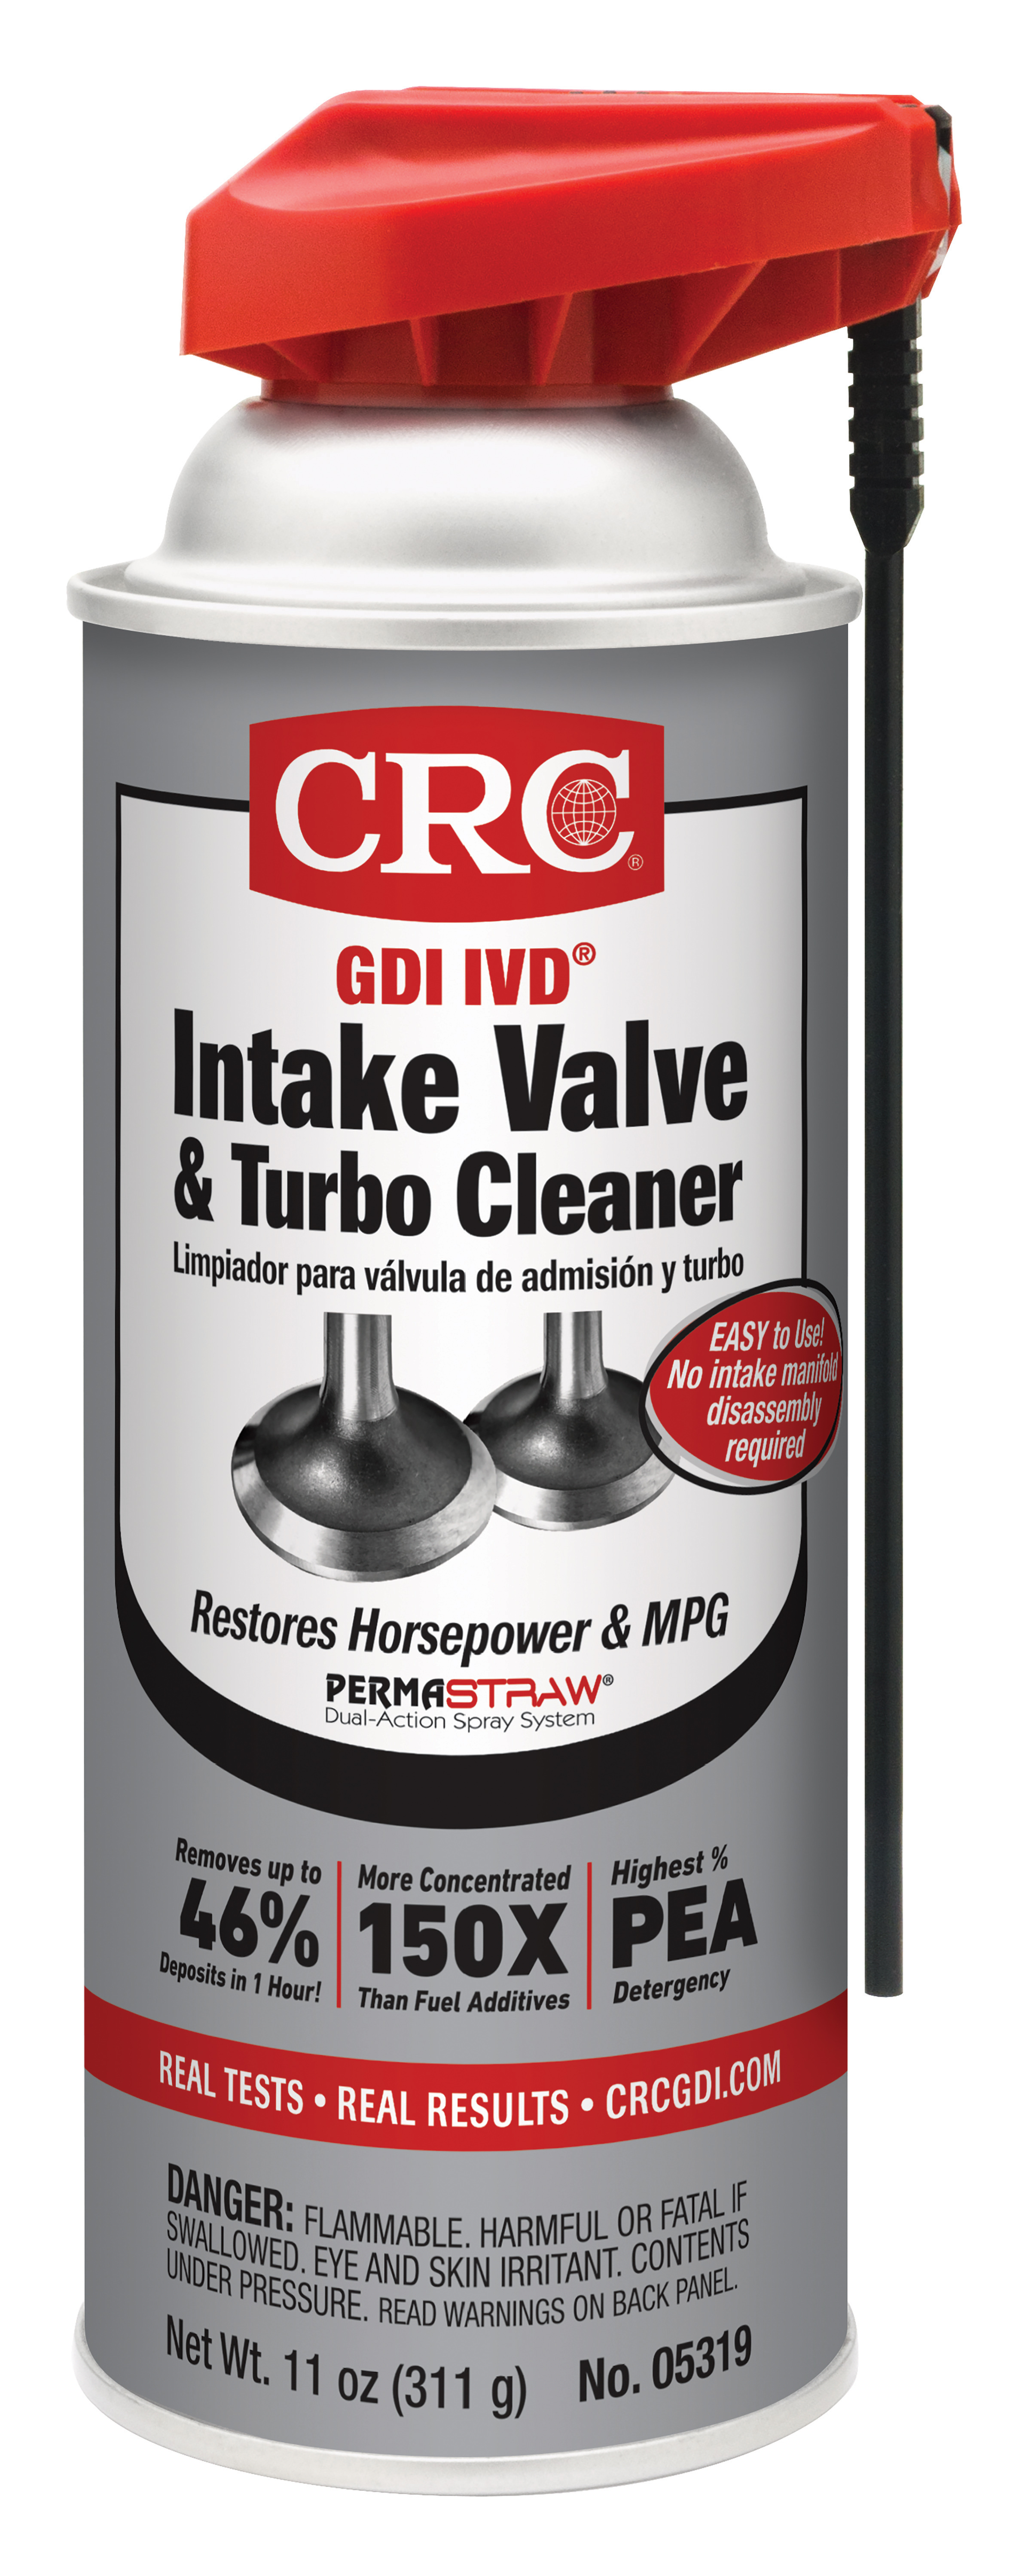 CRC Industries' GDI IVD Intake Valve & Turbo Cleaner to Debut at